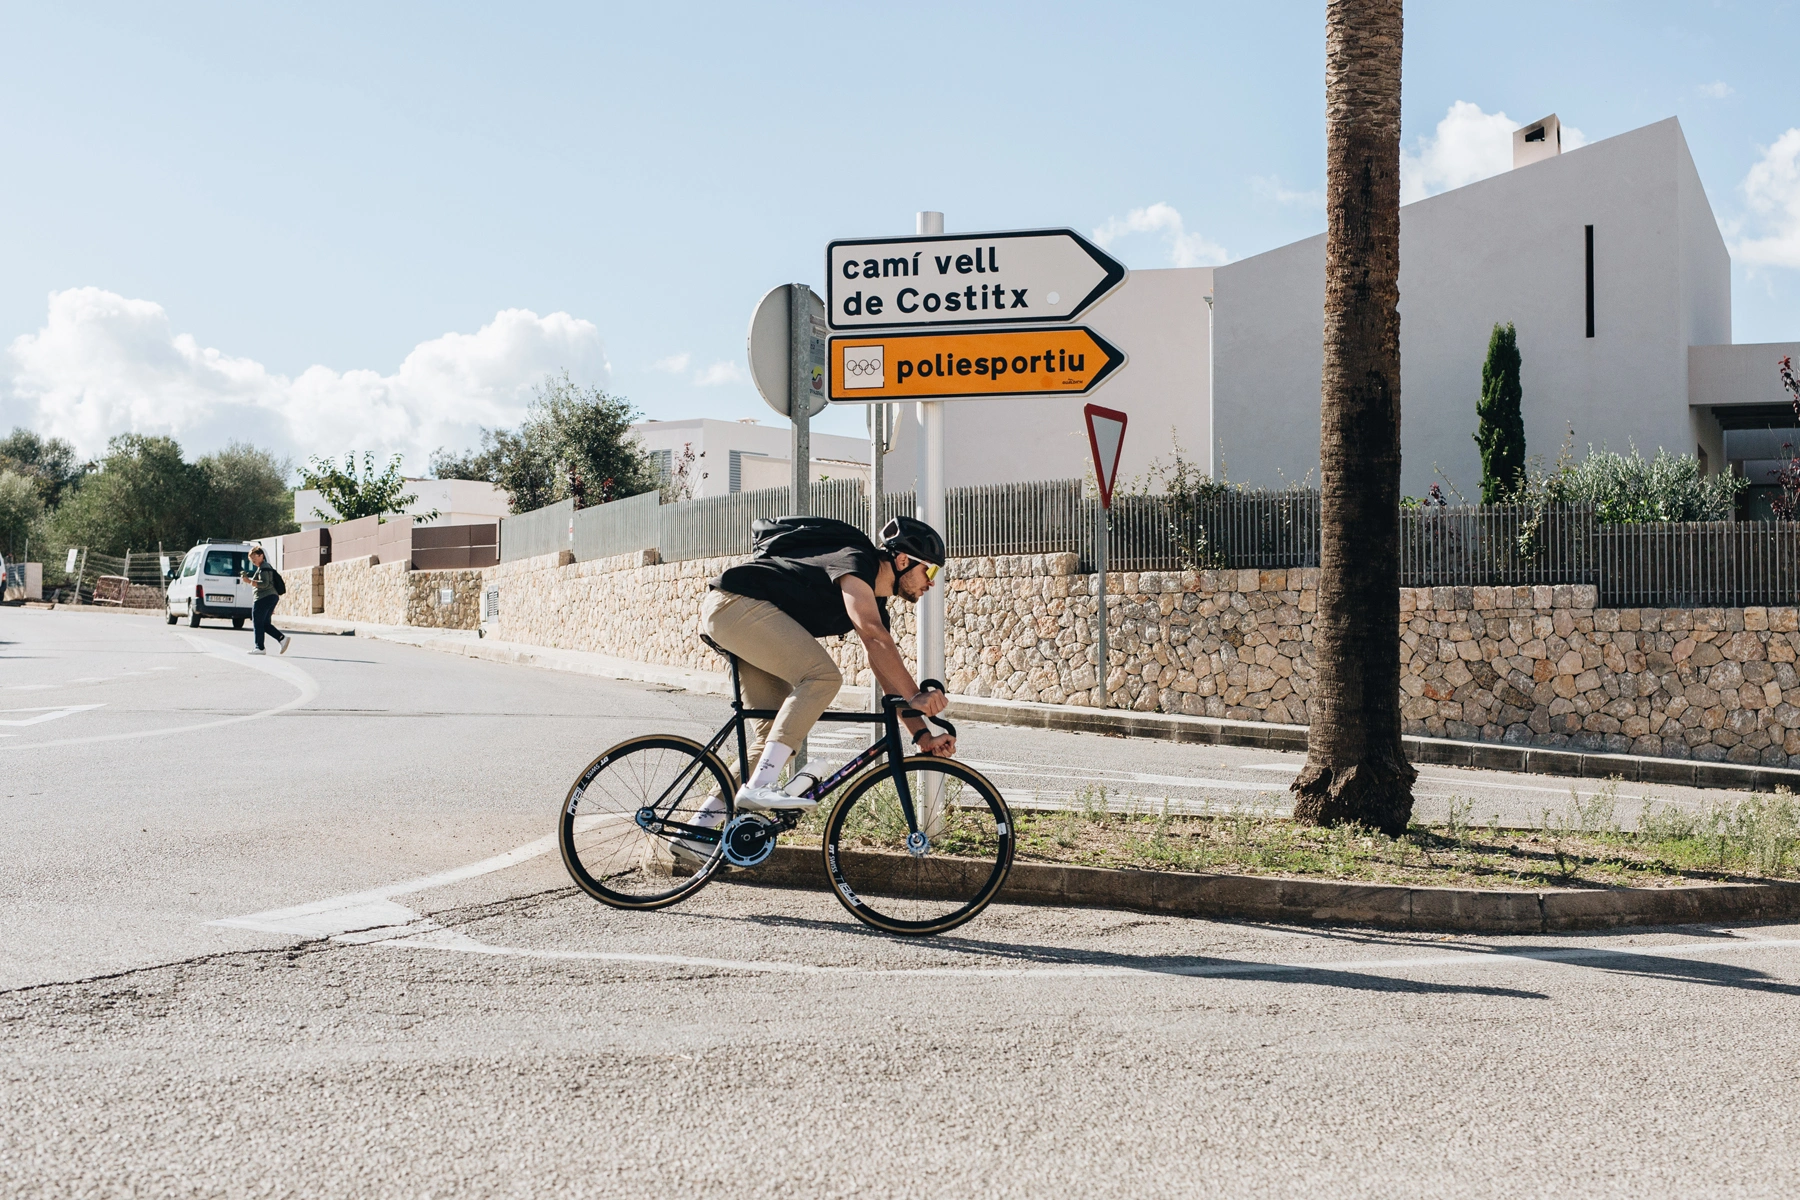 Cycling in Mallorca